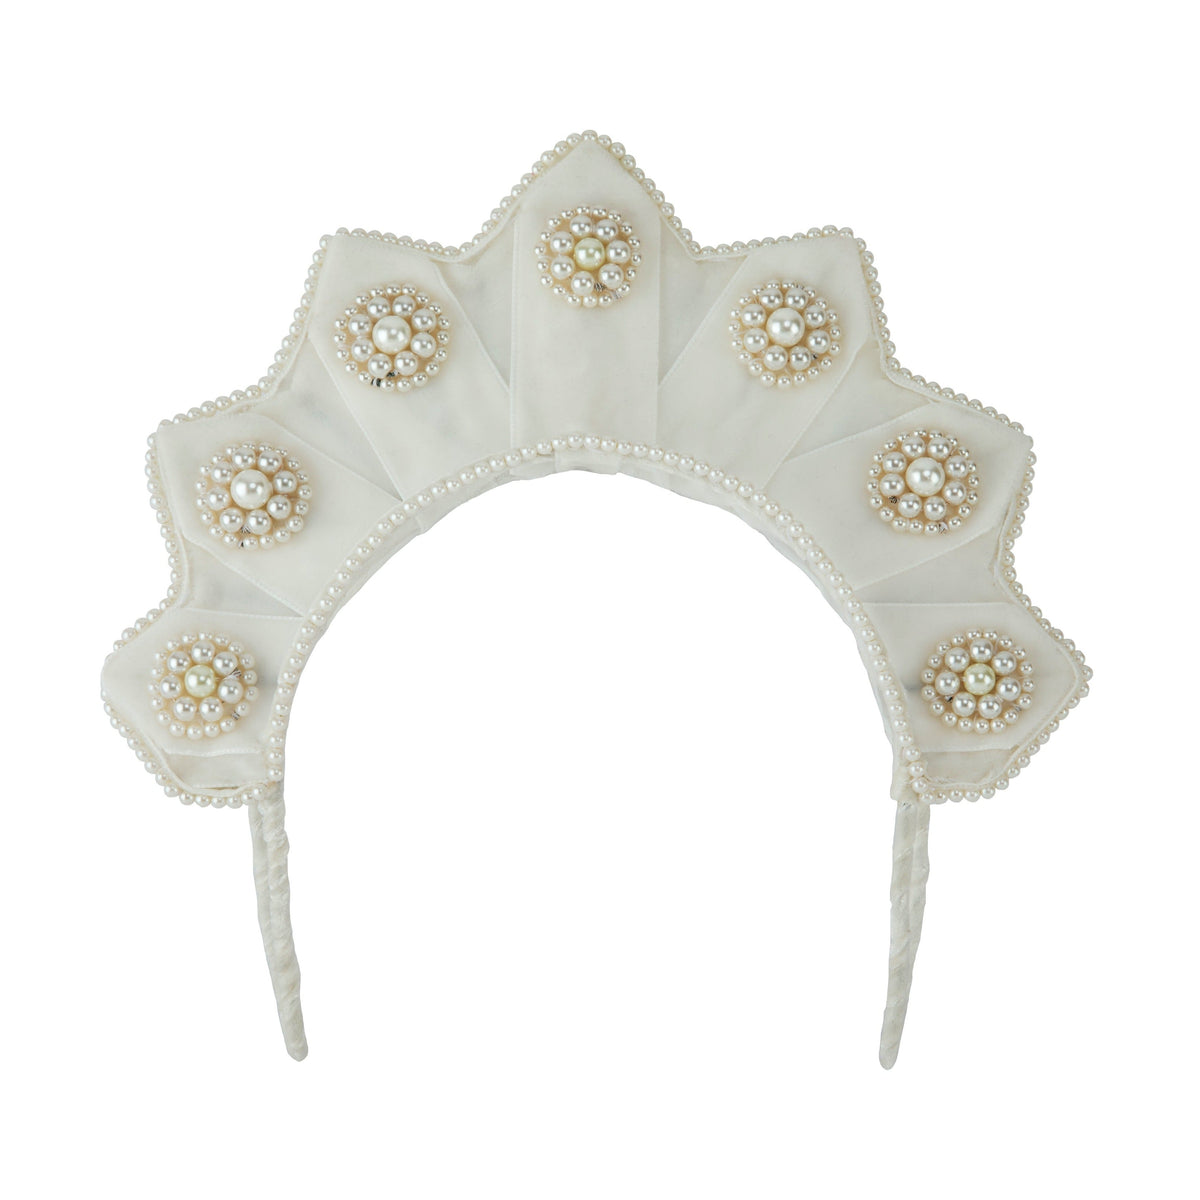 Star Shaped Pearl Headpiece in Ivory Velvet